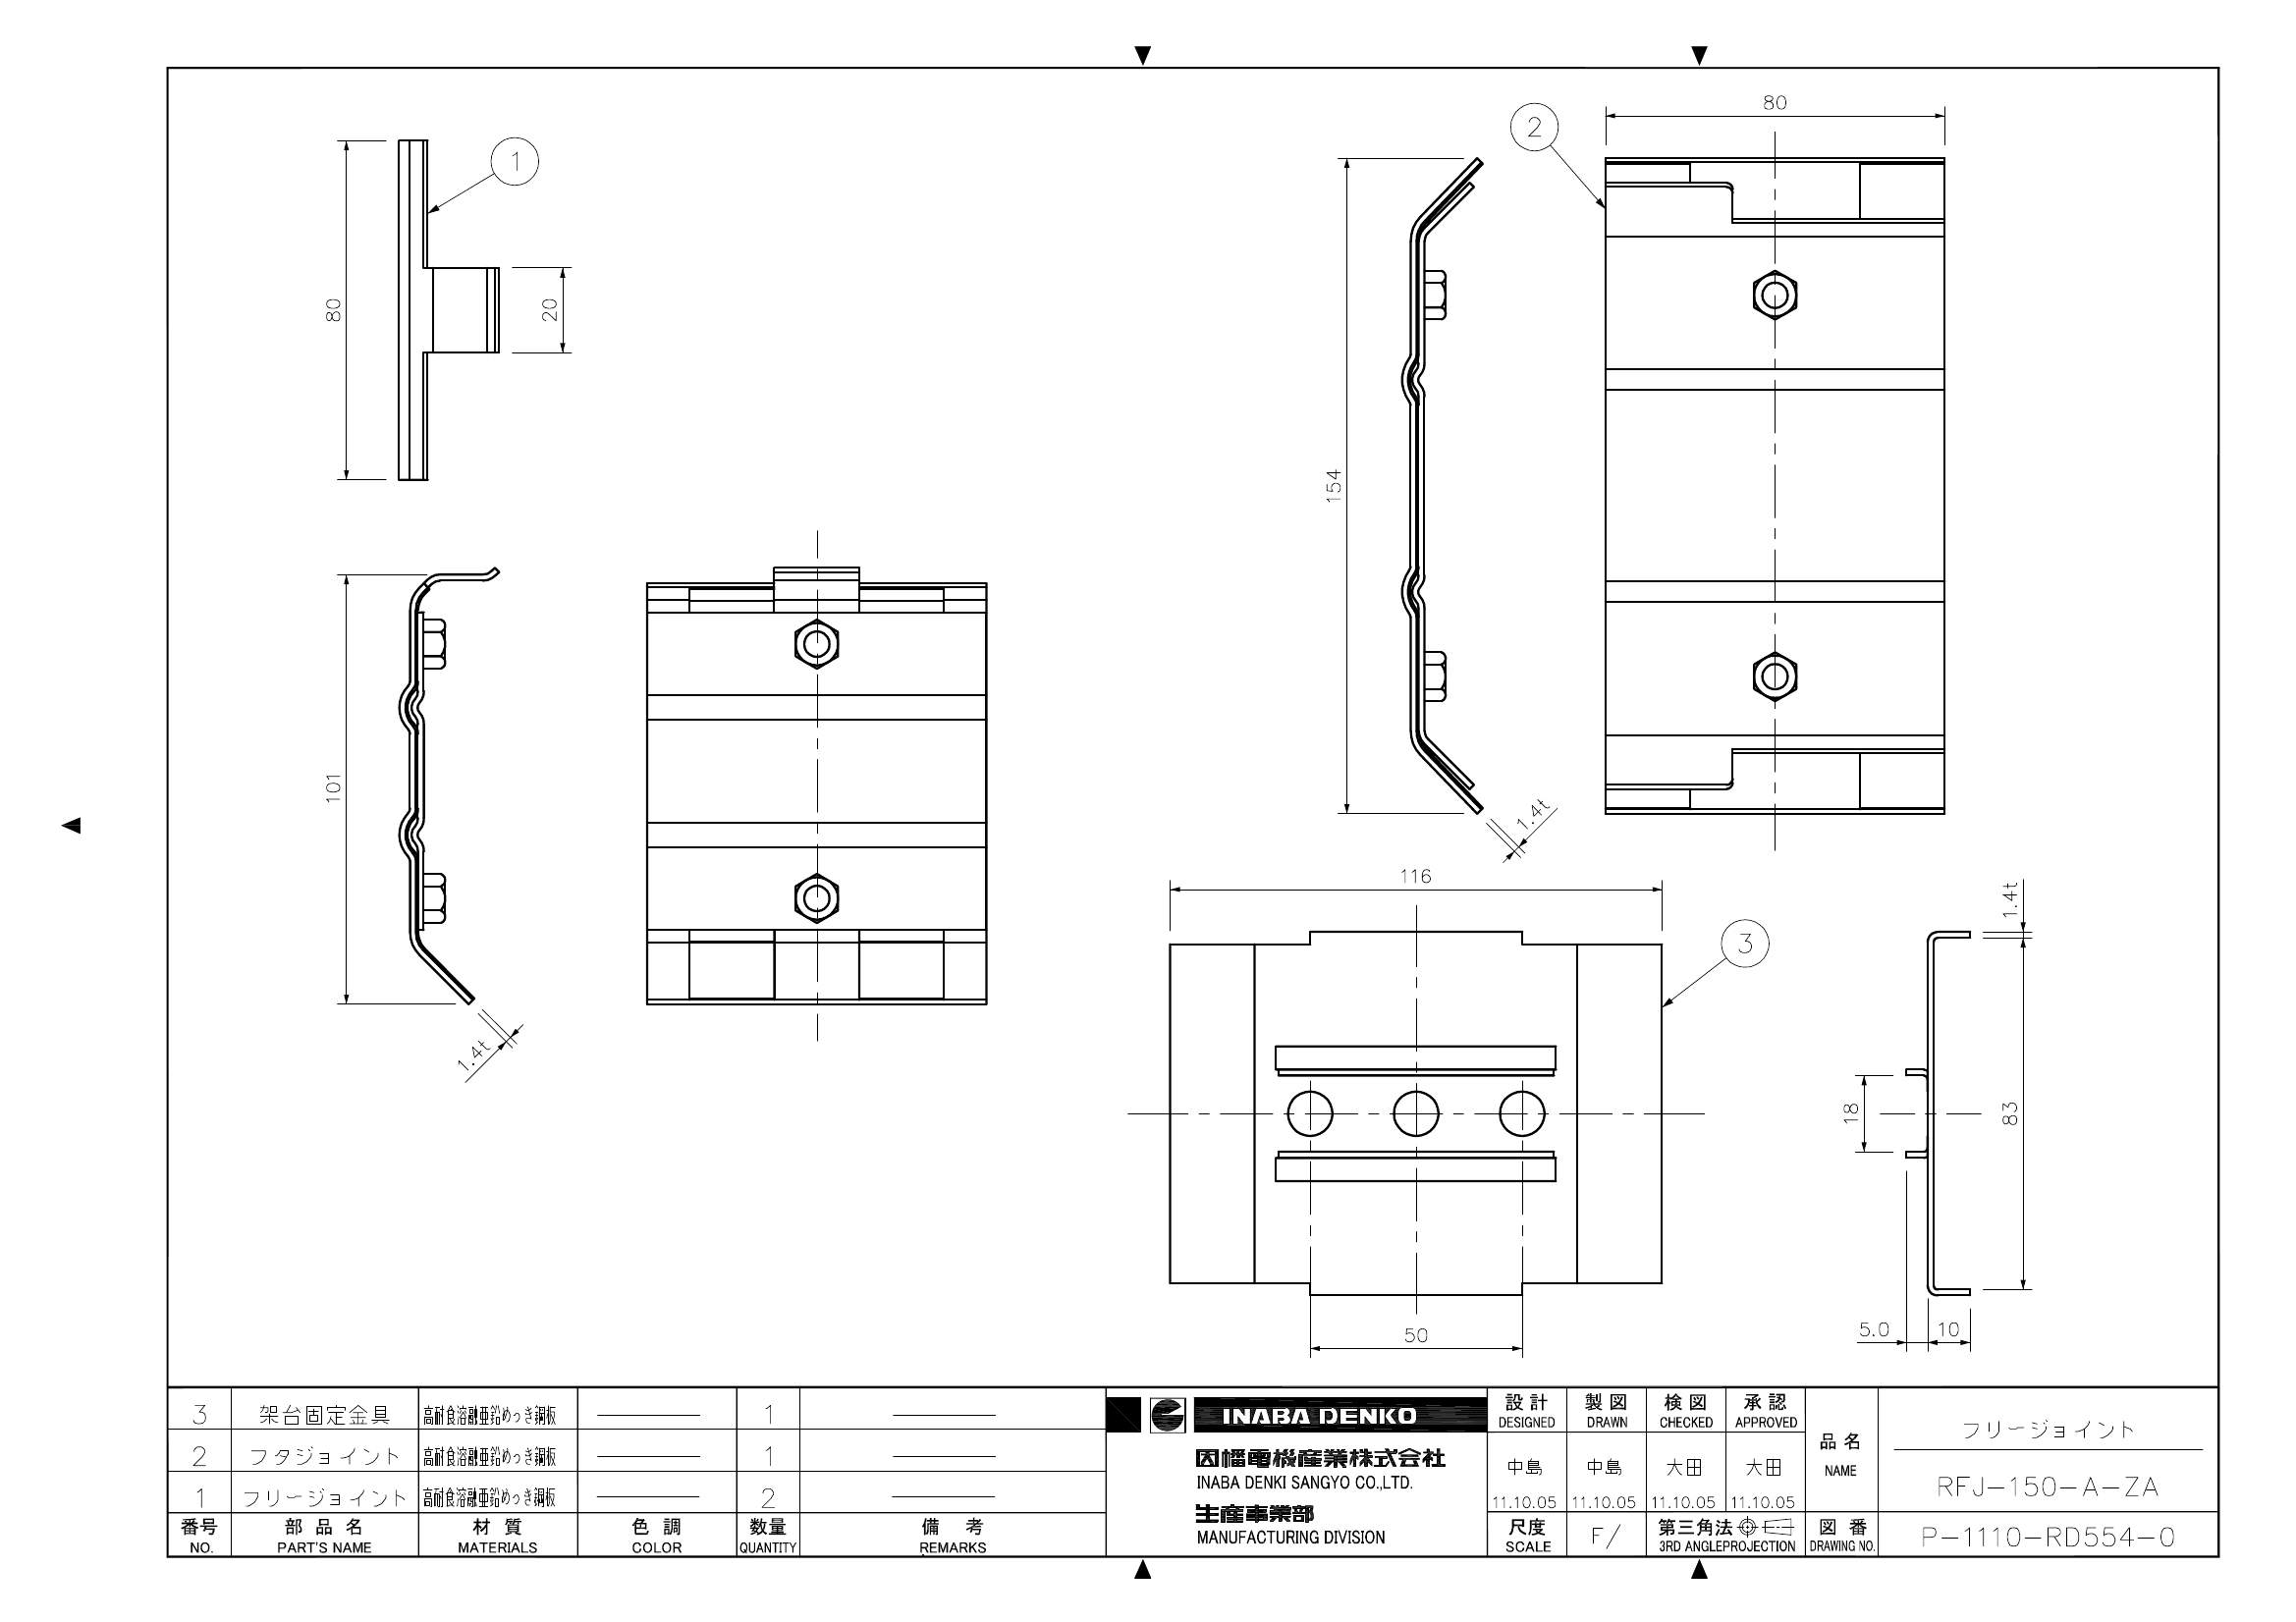 RFJ-150-A-ZA_仕様図面_20120607.pdf